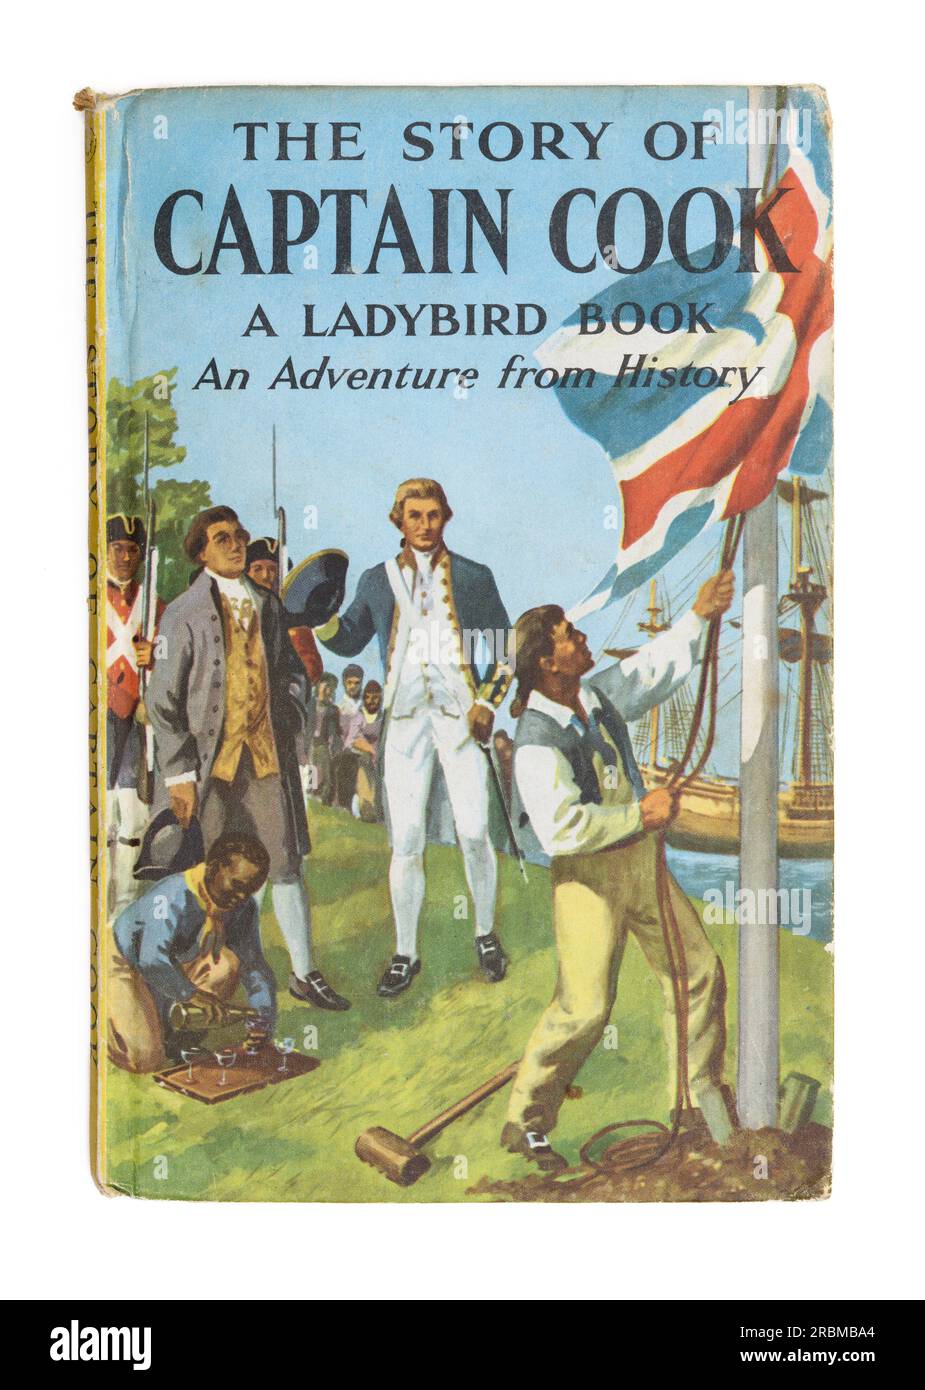 Copertina di The Story of Captain Cook un libro di storia di Ladybird per bambini Foto Stock